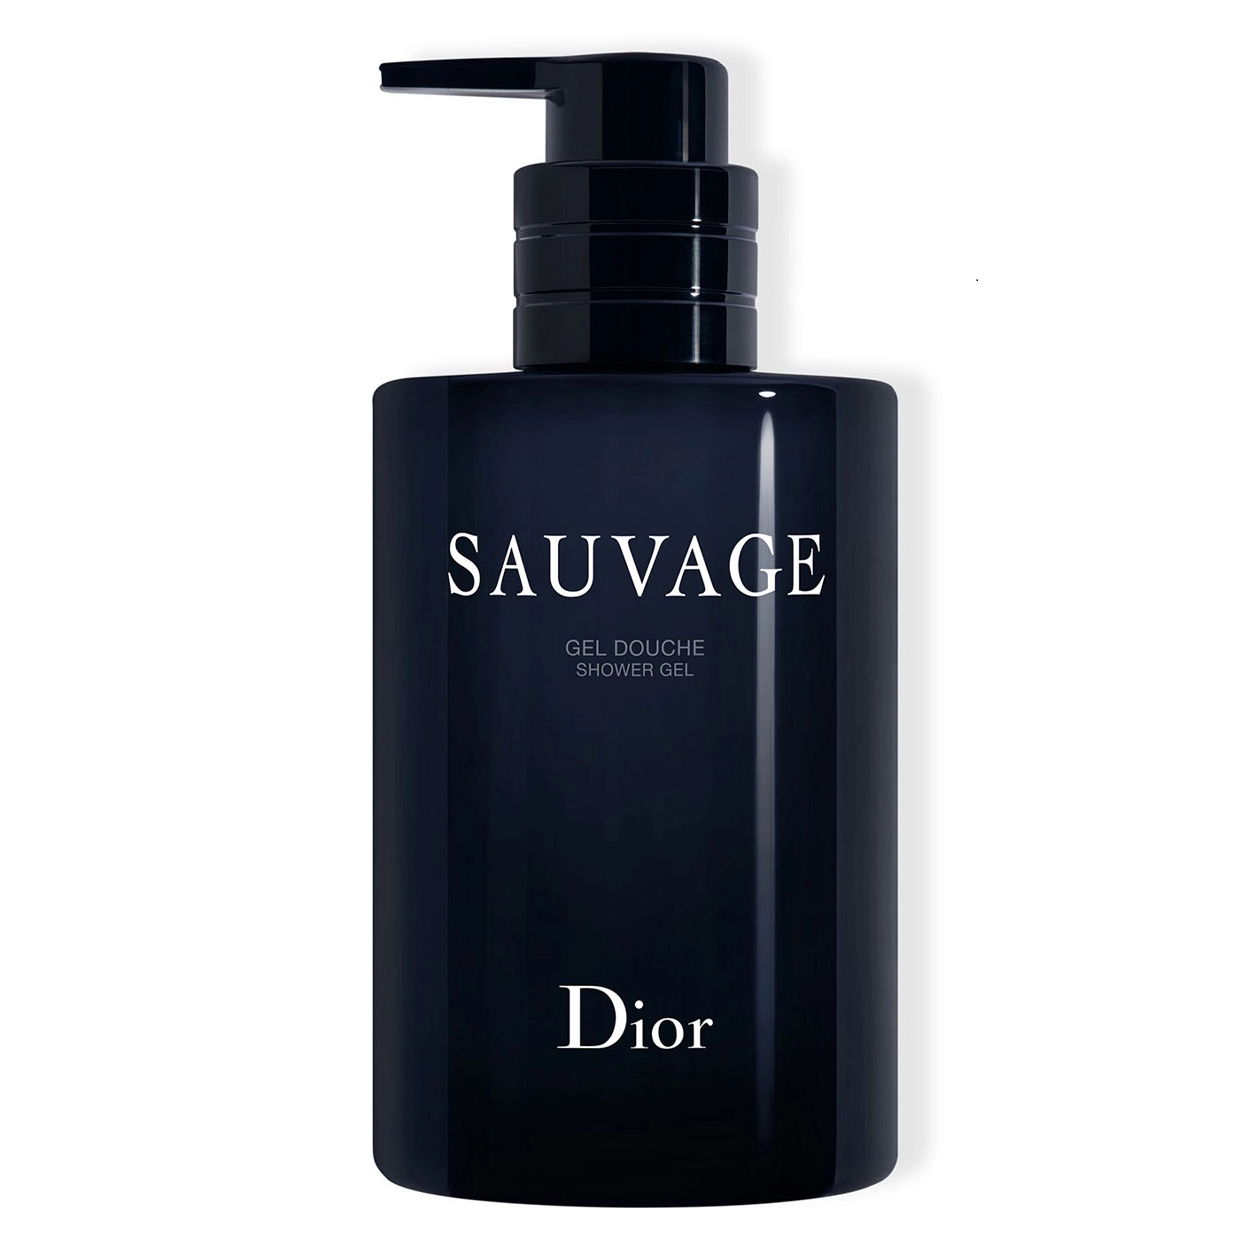 Dior Sauvage Shower Gel 250ml - Feel Gorgeous